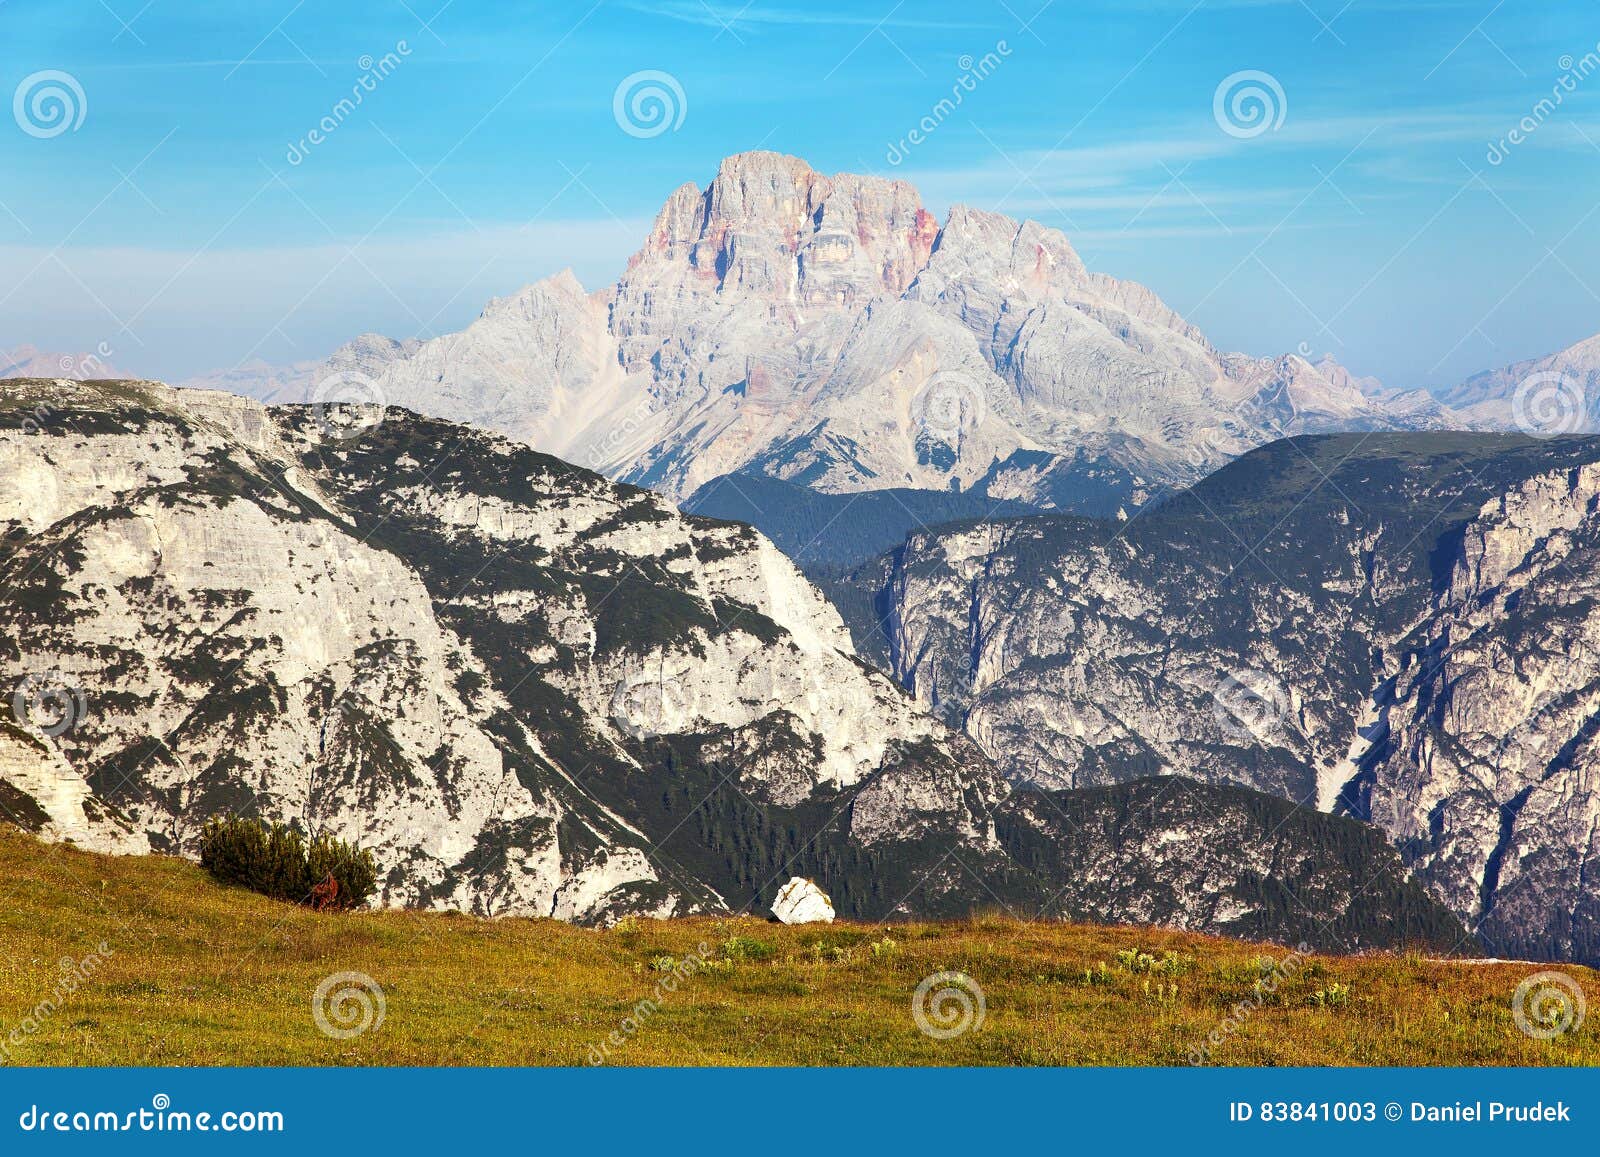 grupo del cristallo, dolomites alps mountains